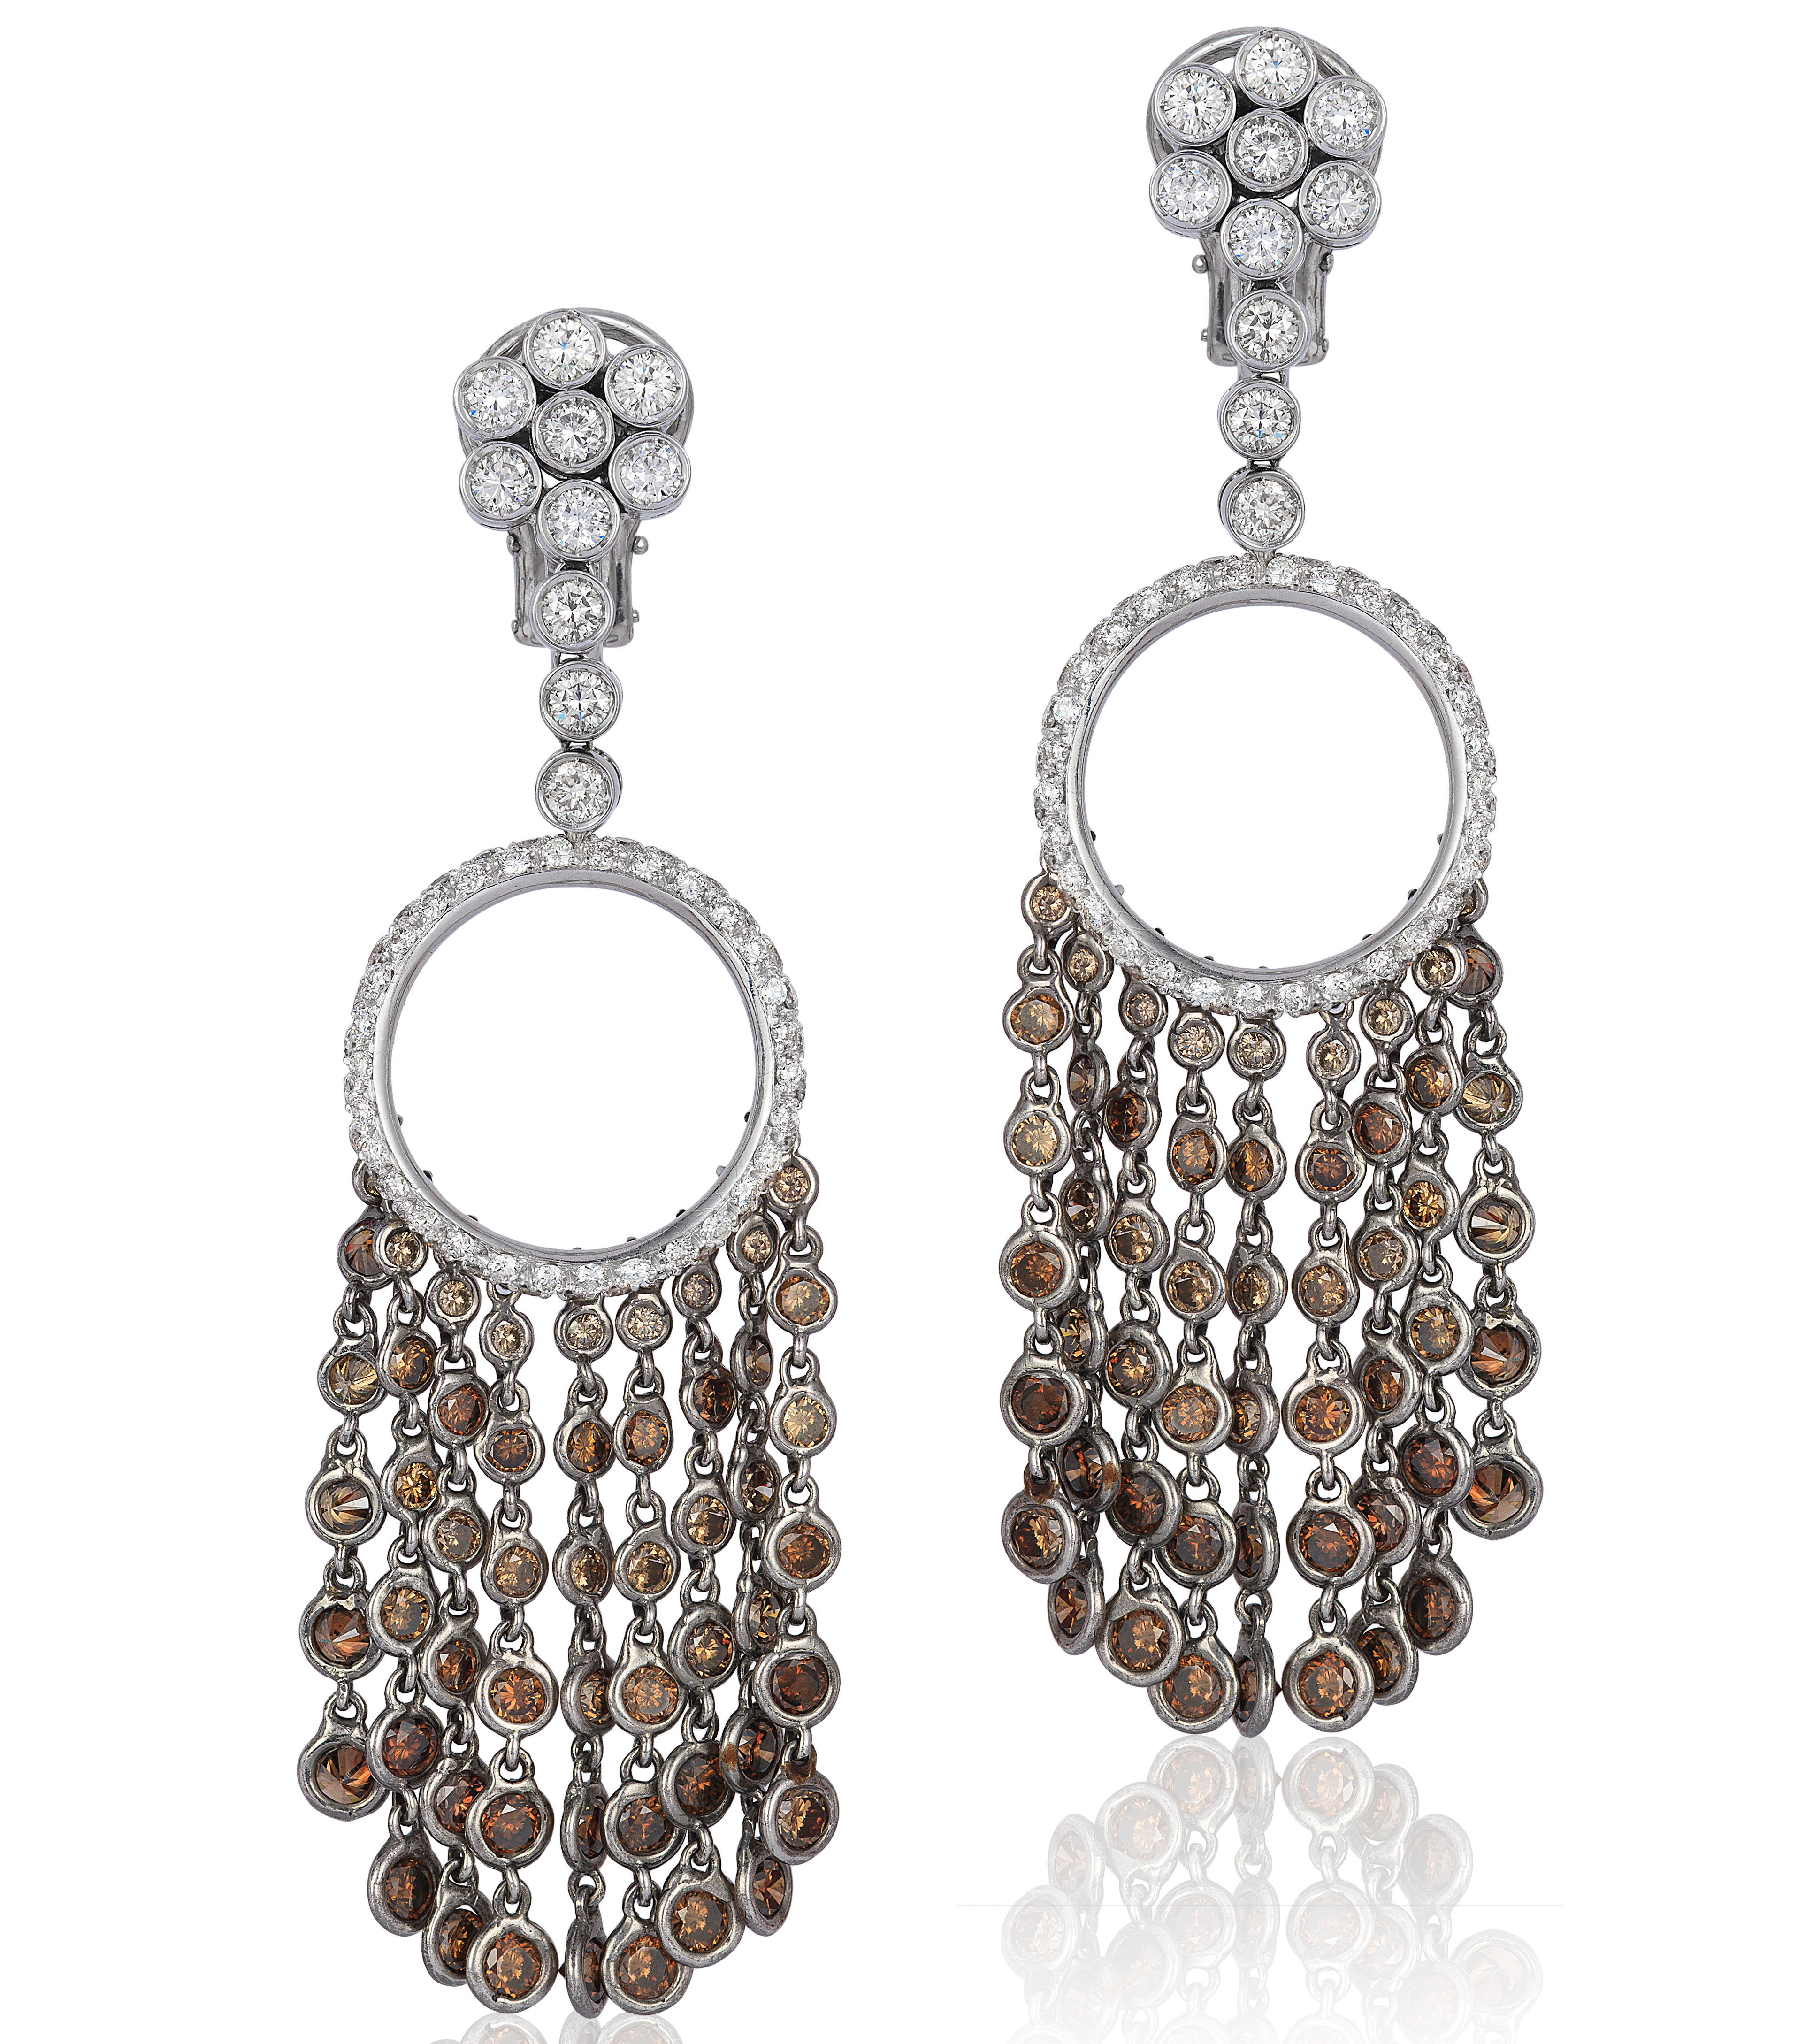 Andreoli earrings | JCK On Your Market